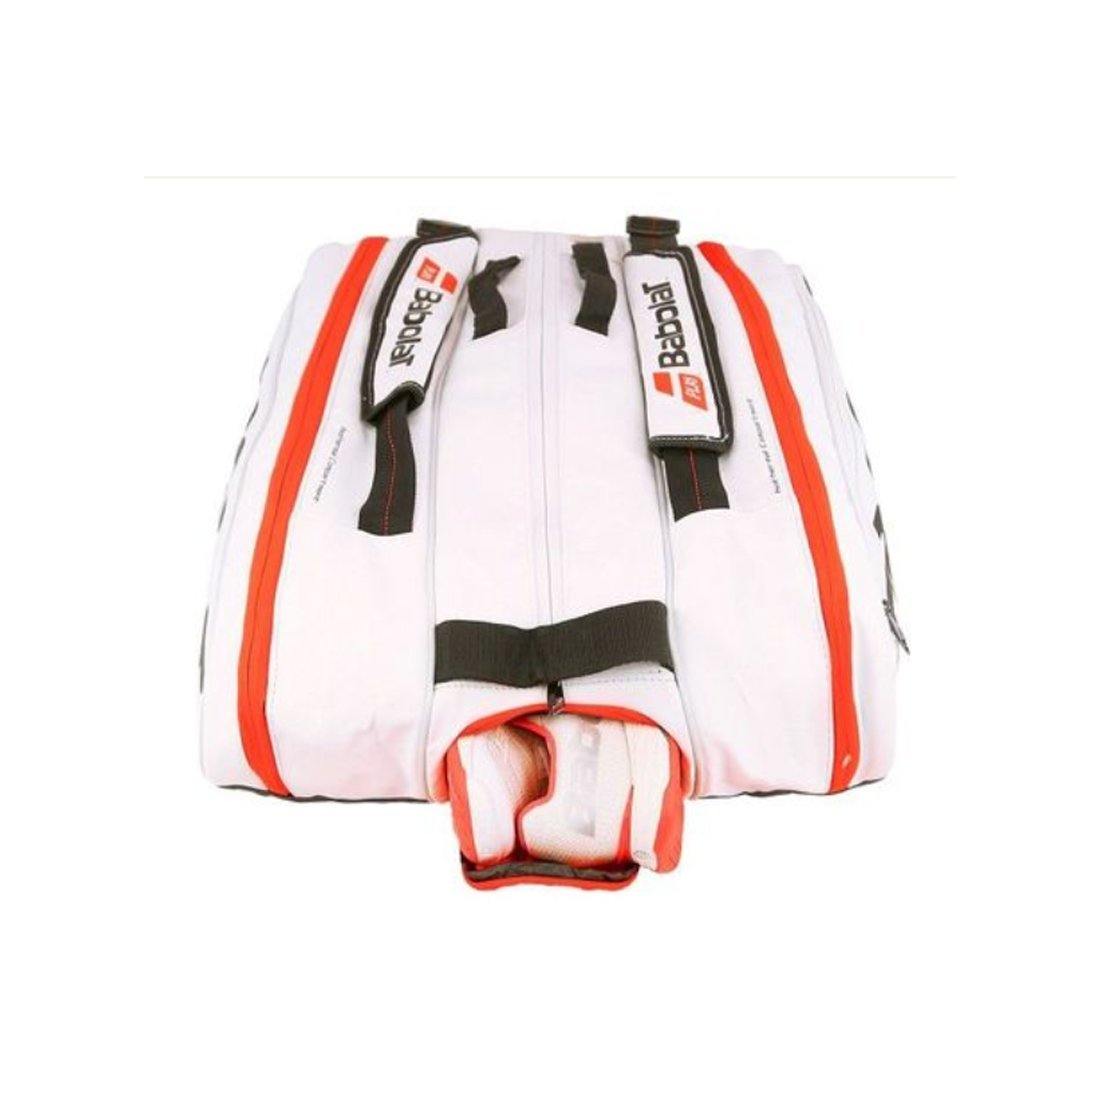 Babolat RHX12 Pure Strike Tennis Kitbag - White/Red - Best Price online Prokicksports.com